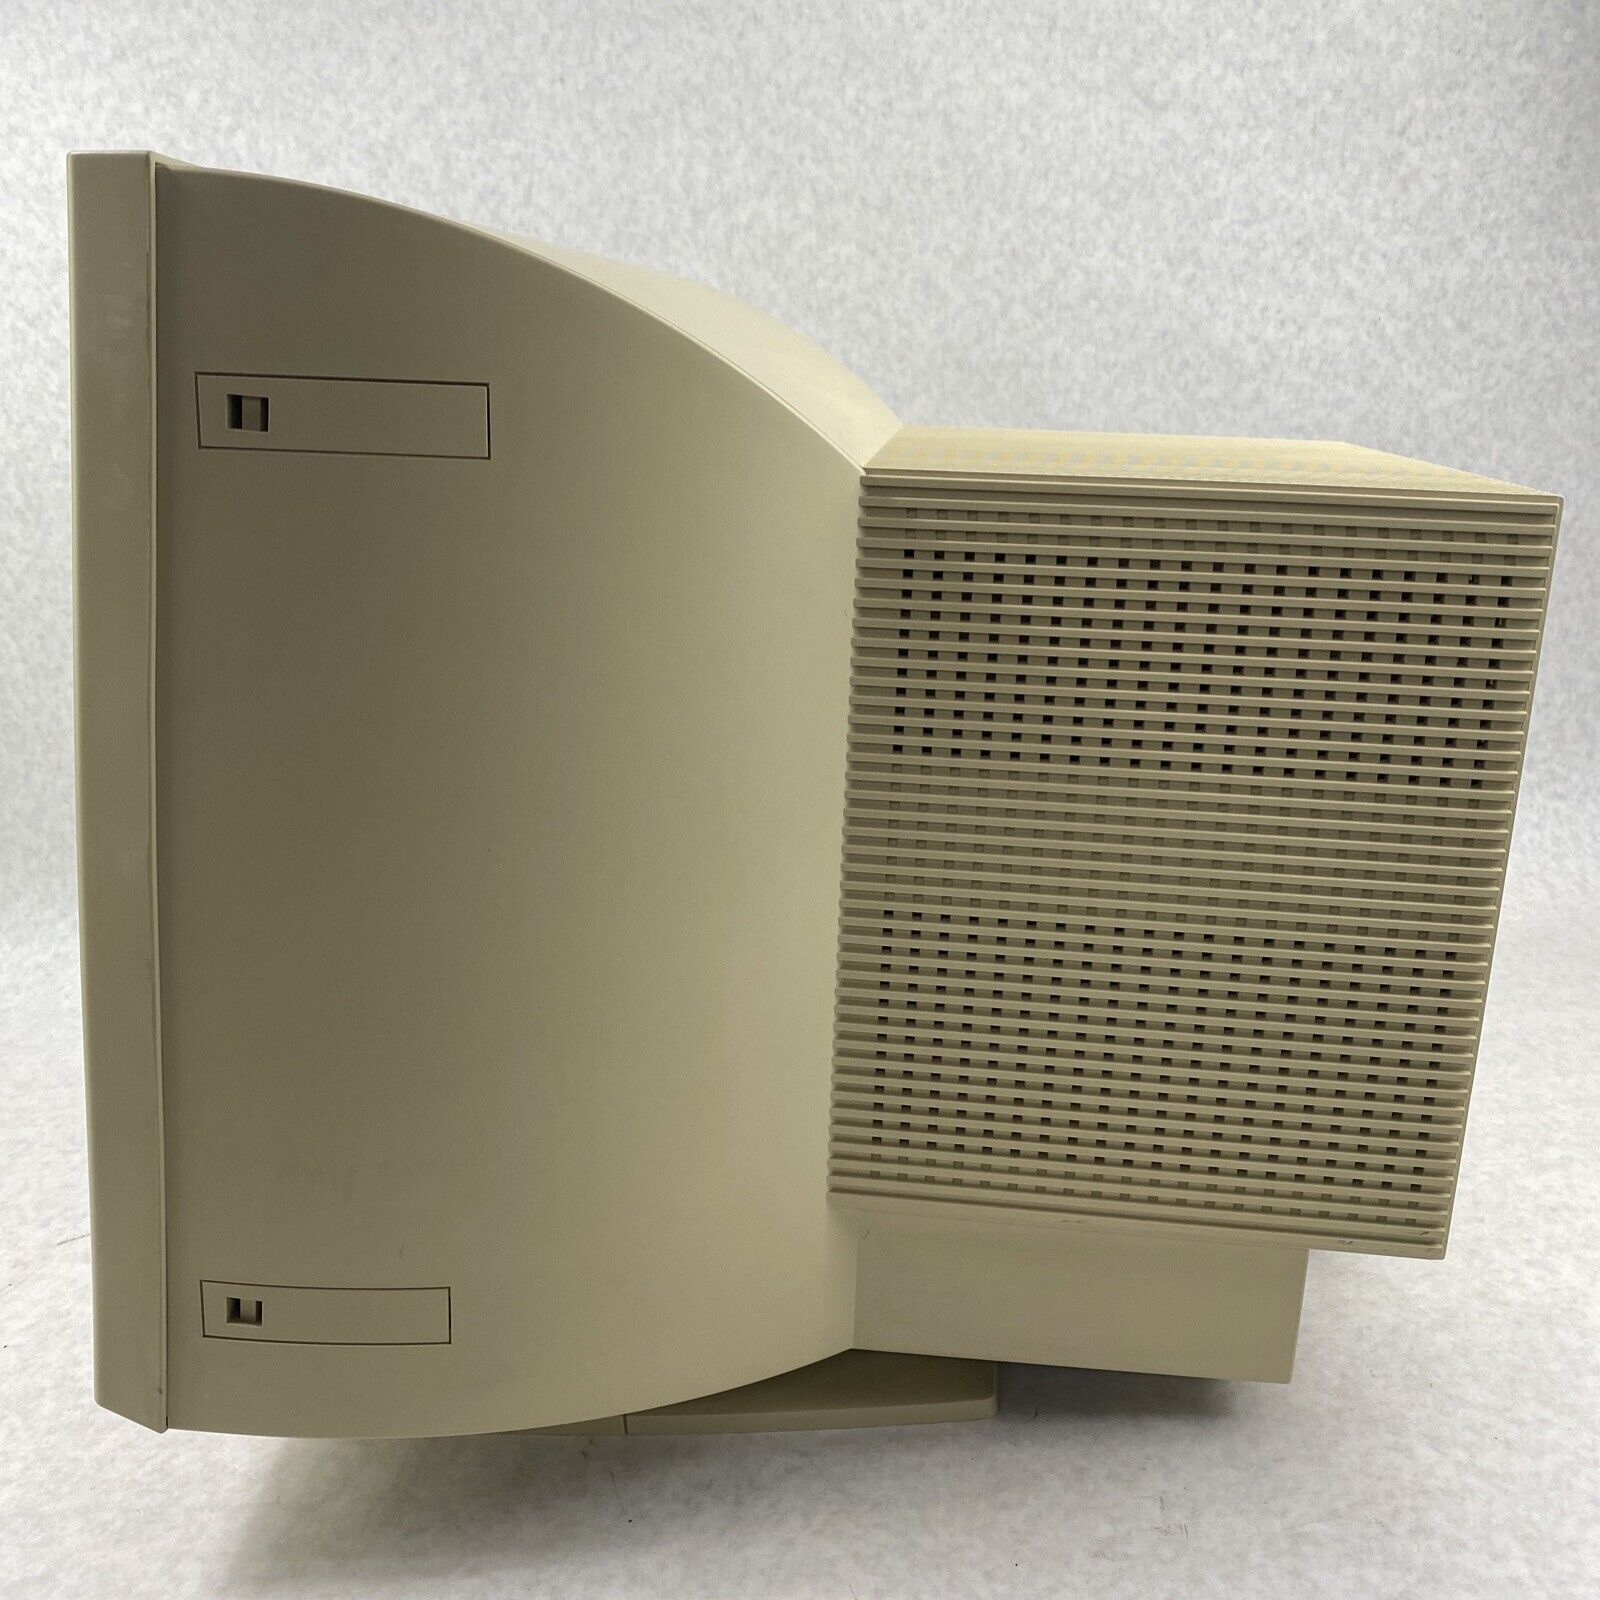 IBM 6547-01N Vintage CRT Computer Monitor TESTED